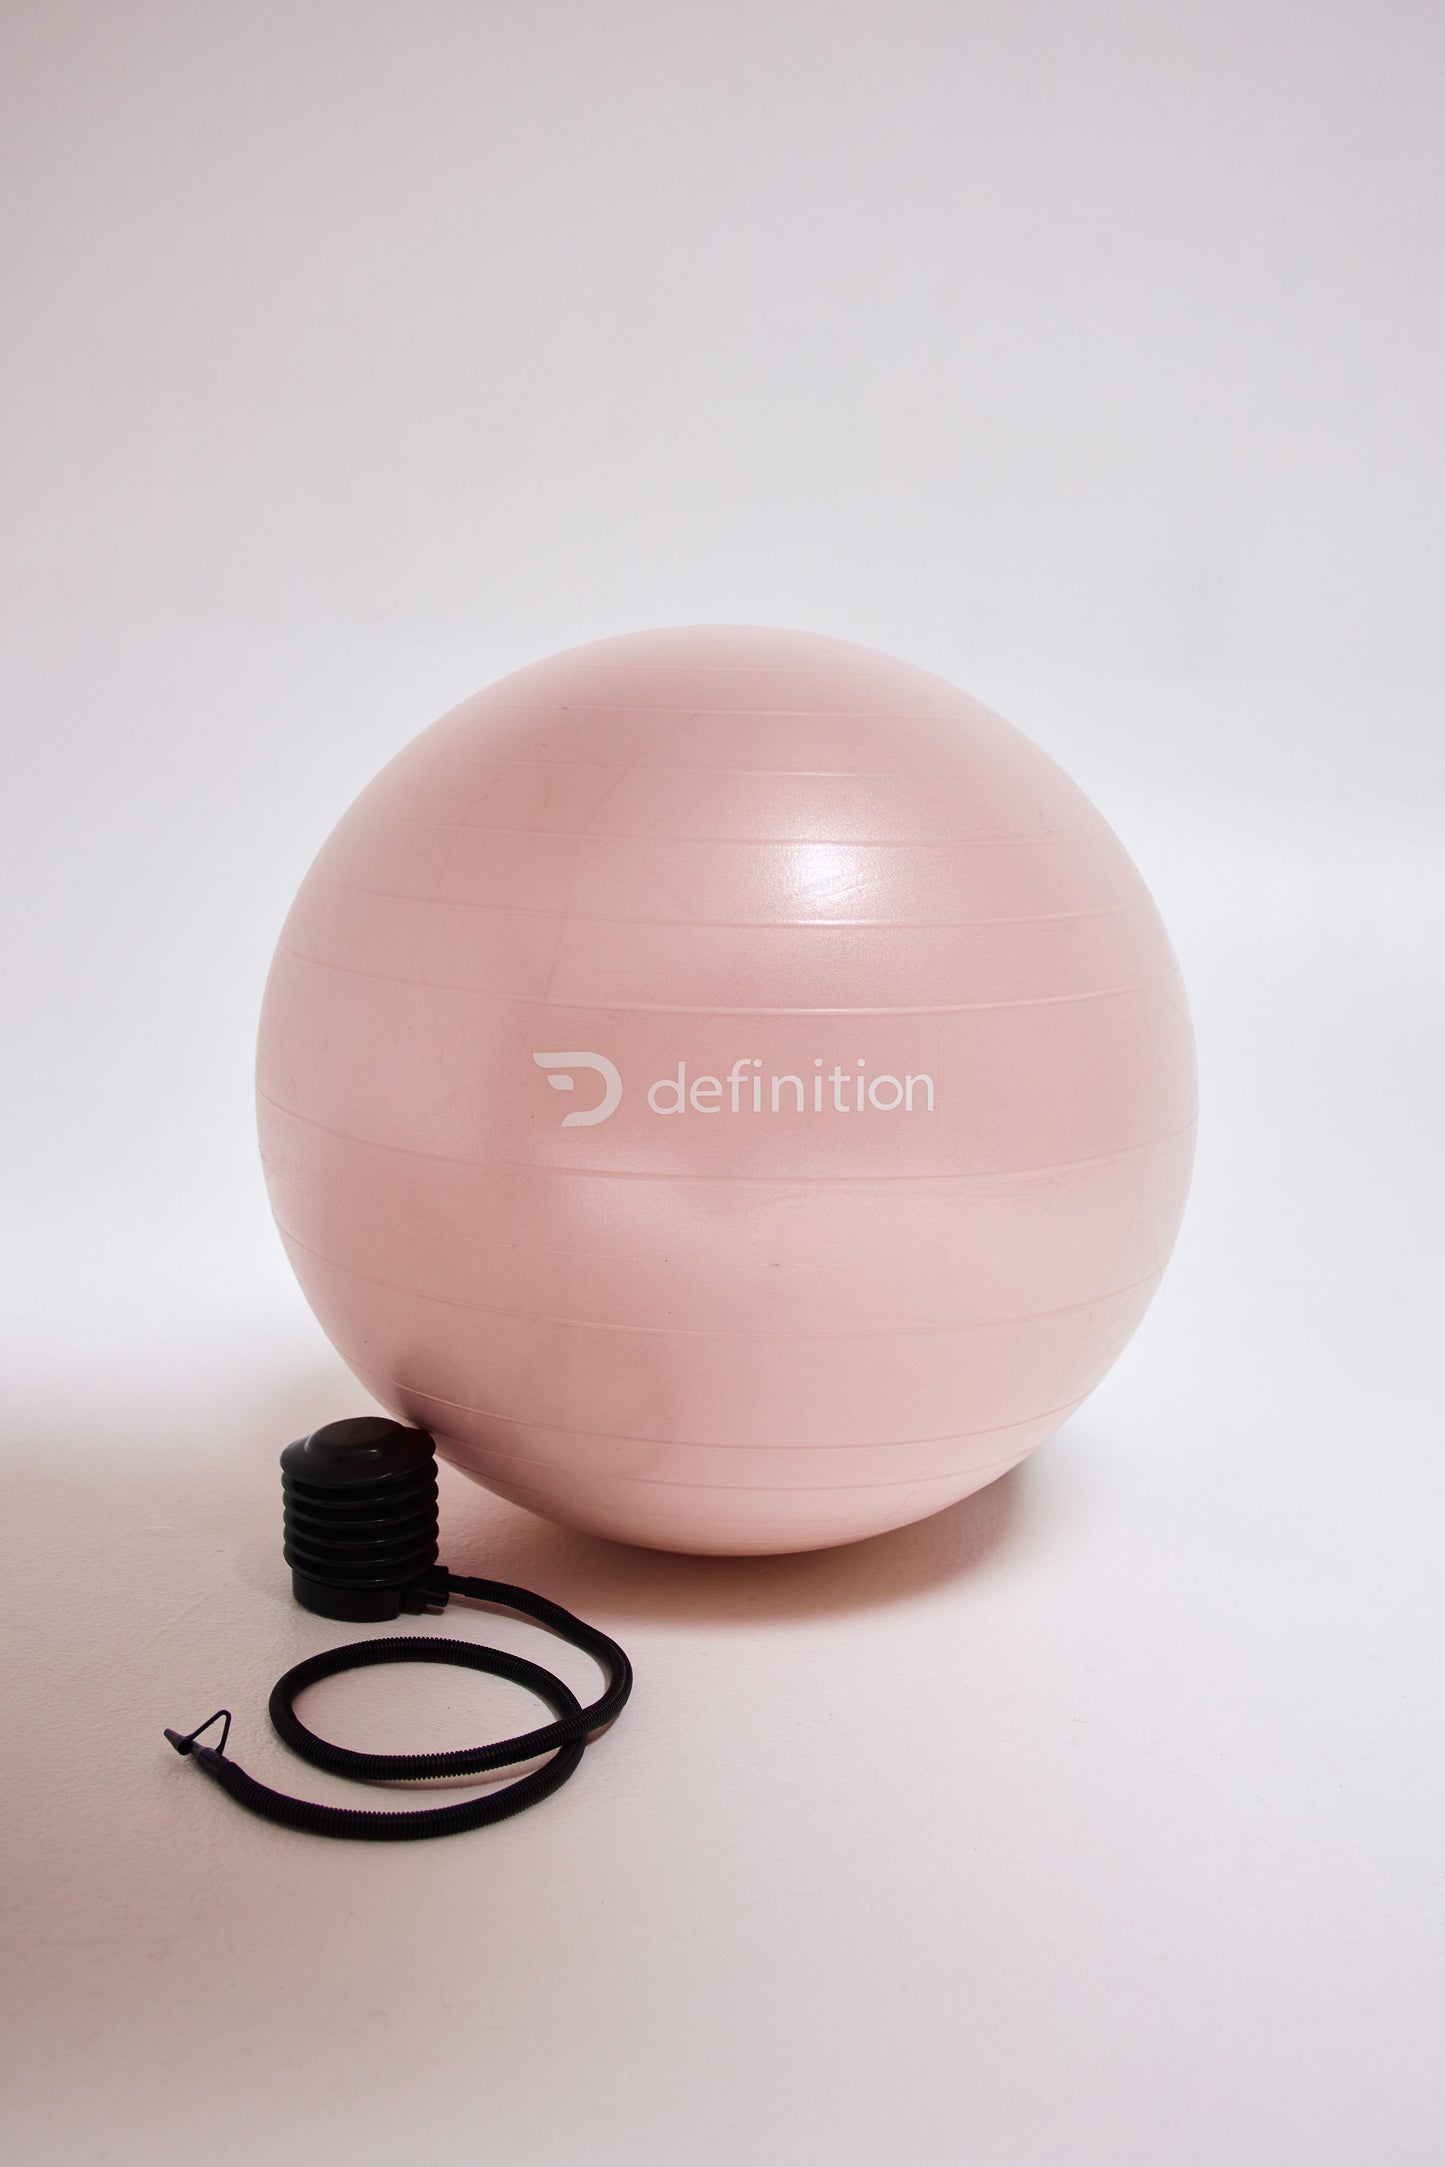 Definition Pregnancy Ball